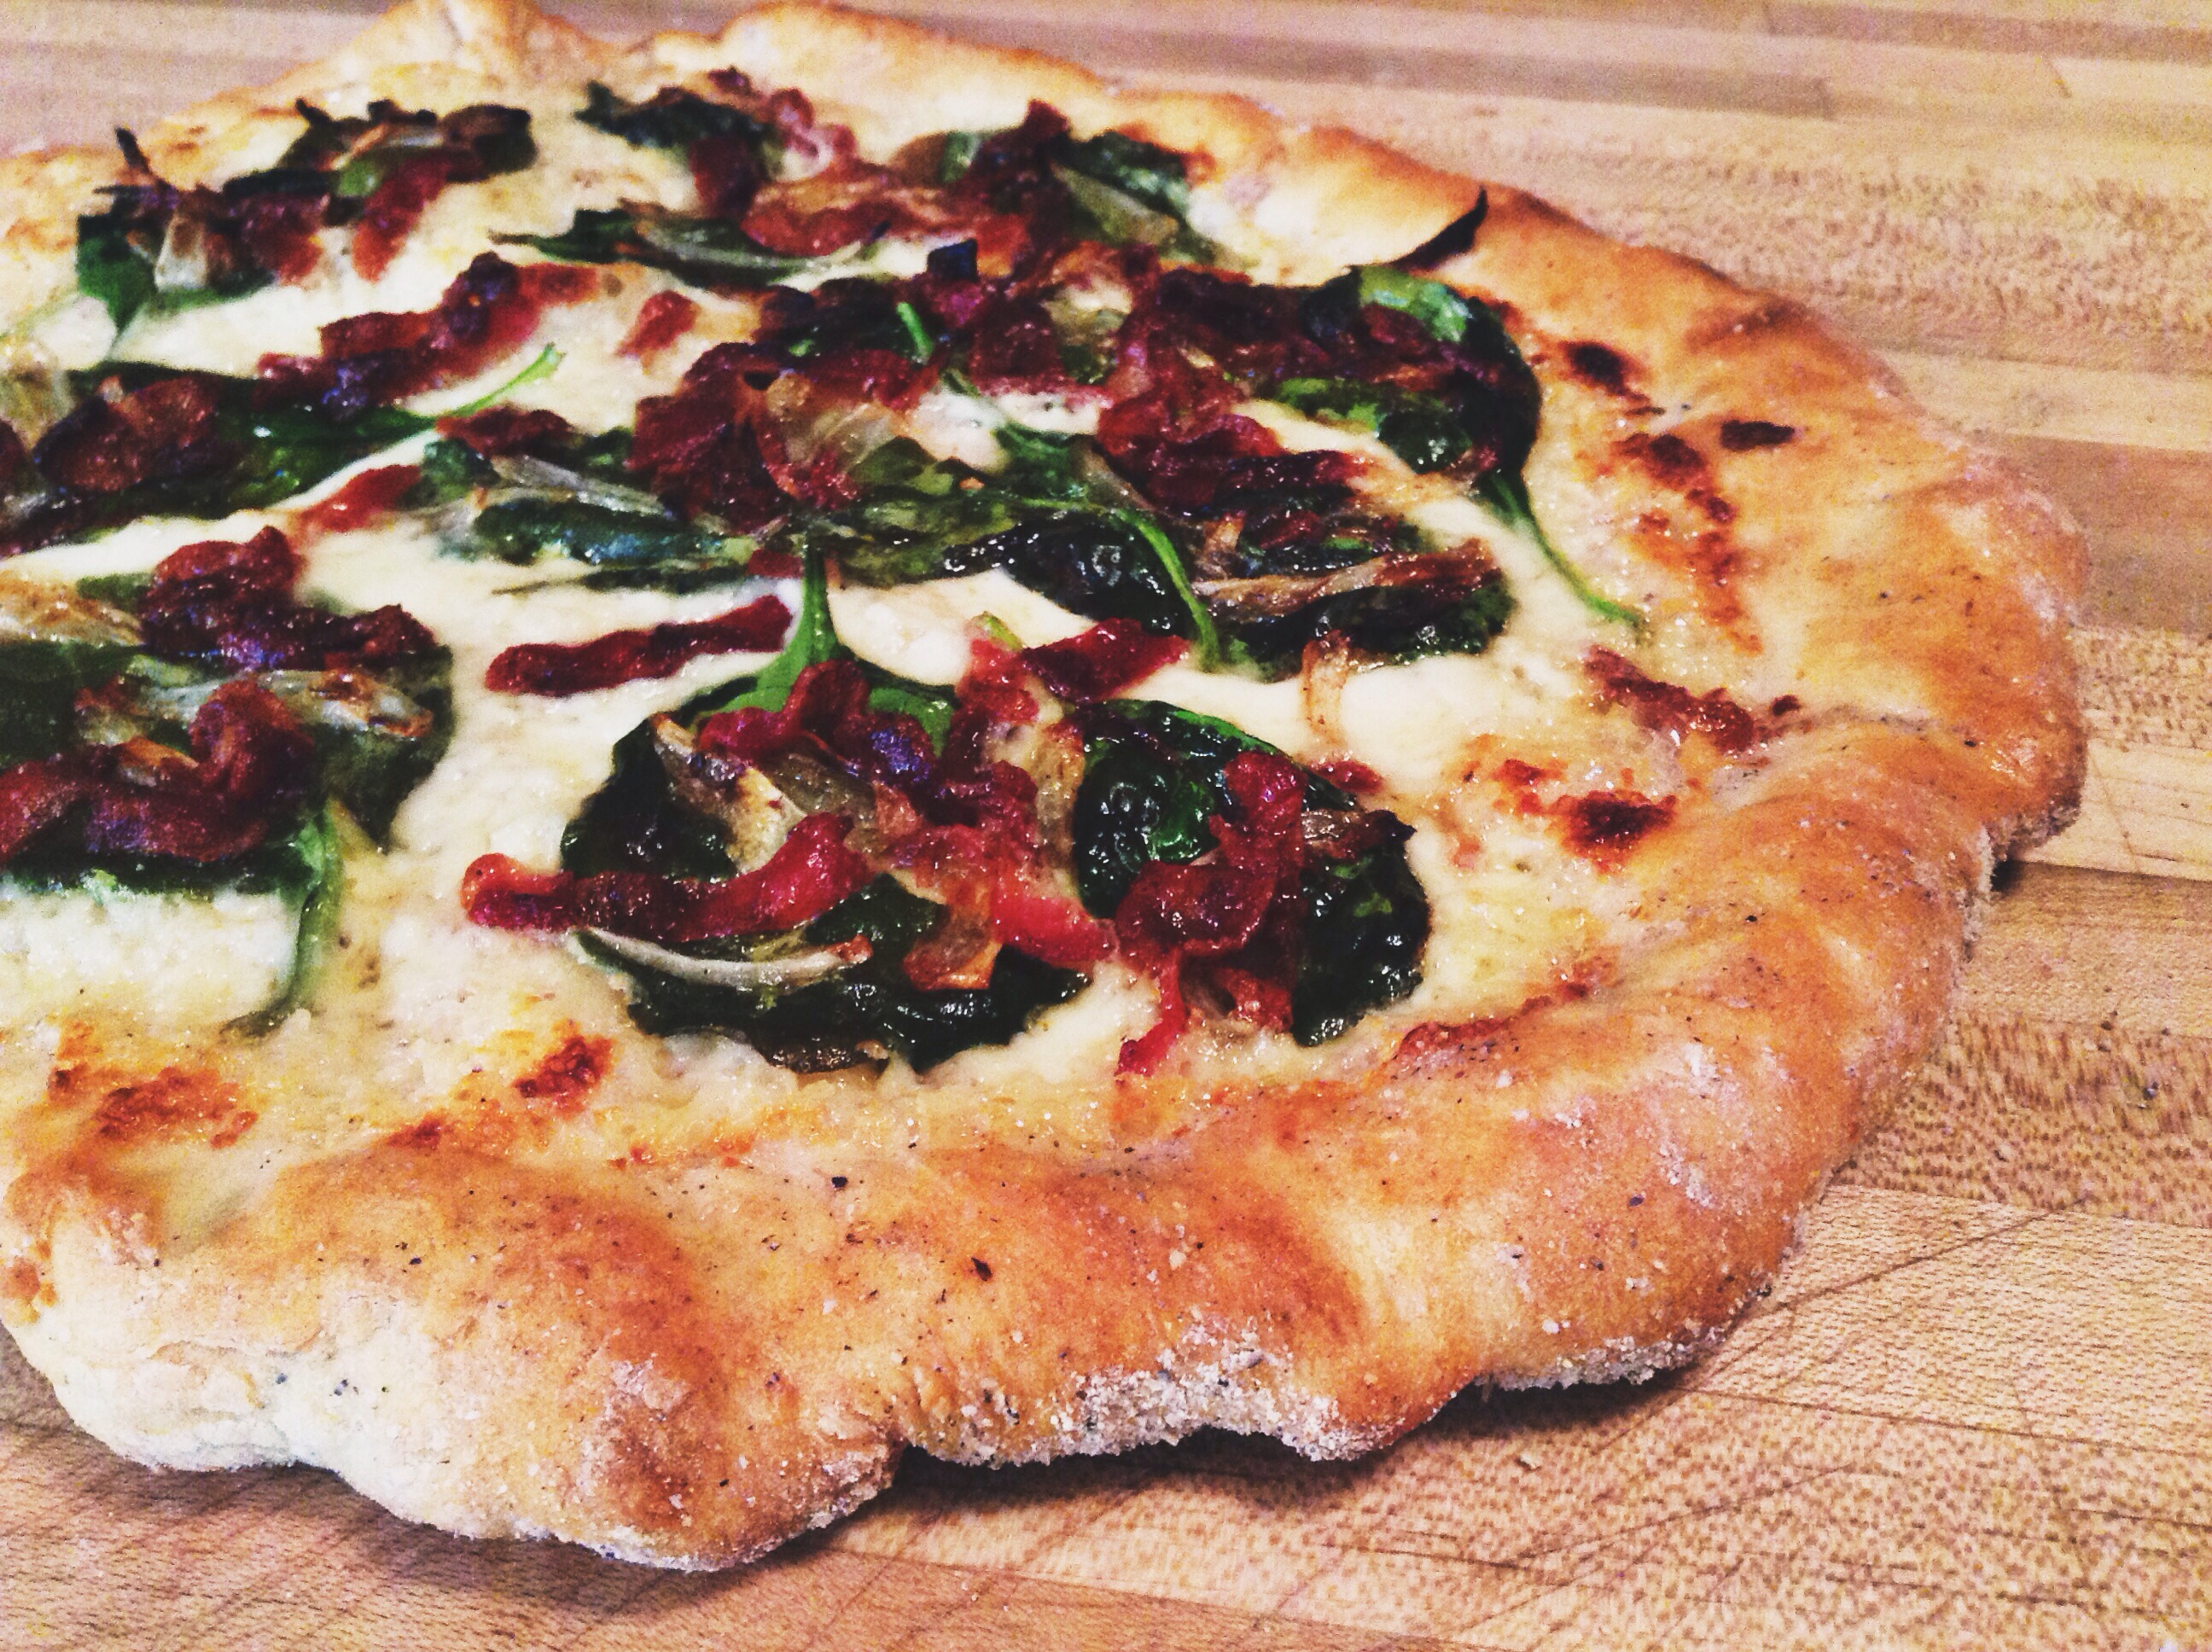 Travel Limbo Calls for Spinach & Bacon Alfredo Pizza